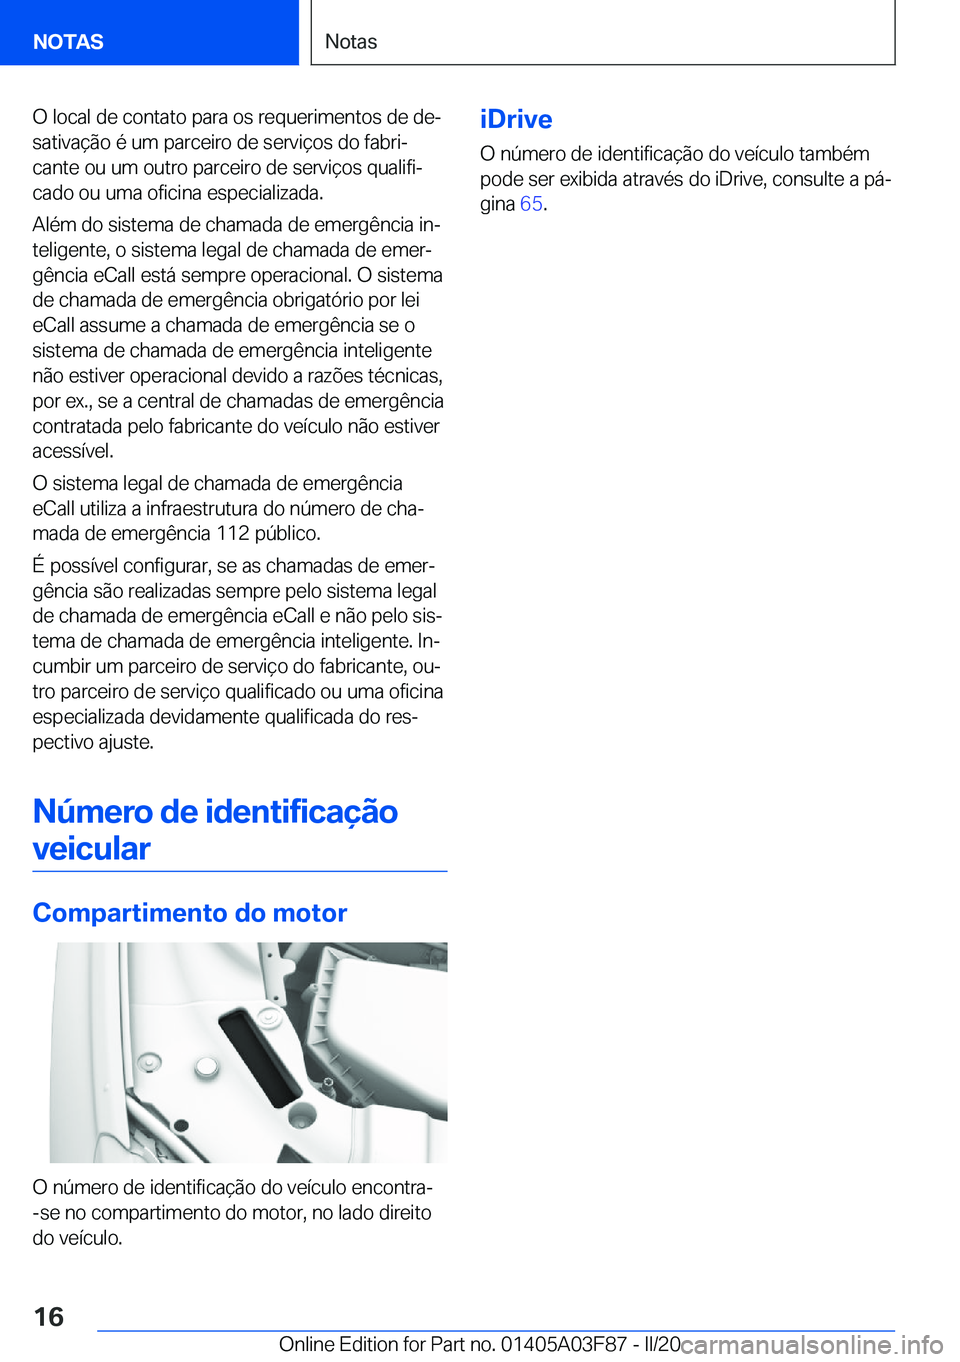 BMW 3 SERIES 2020  Manual do condutor (in Portuguese) �O��l�o�c�a�l��d�e��c�o�n�t�a�t�o��p�a�r�a��o�s��r�e�q�u�e�r�i�m�e�n�t�o�s��d�e��d�eª�s�a�t�i�v�a�